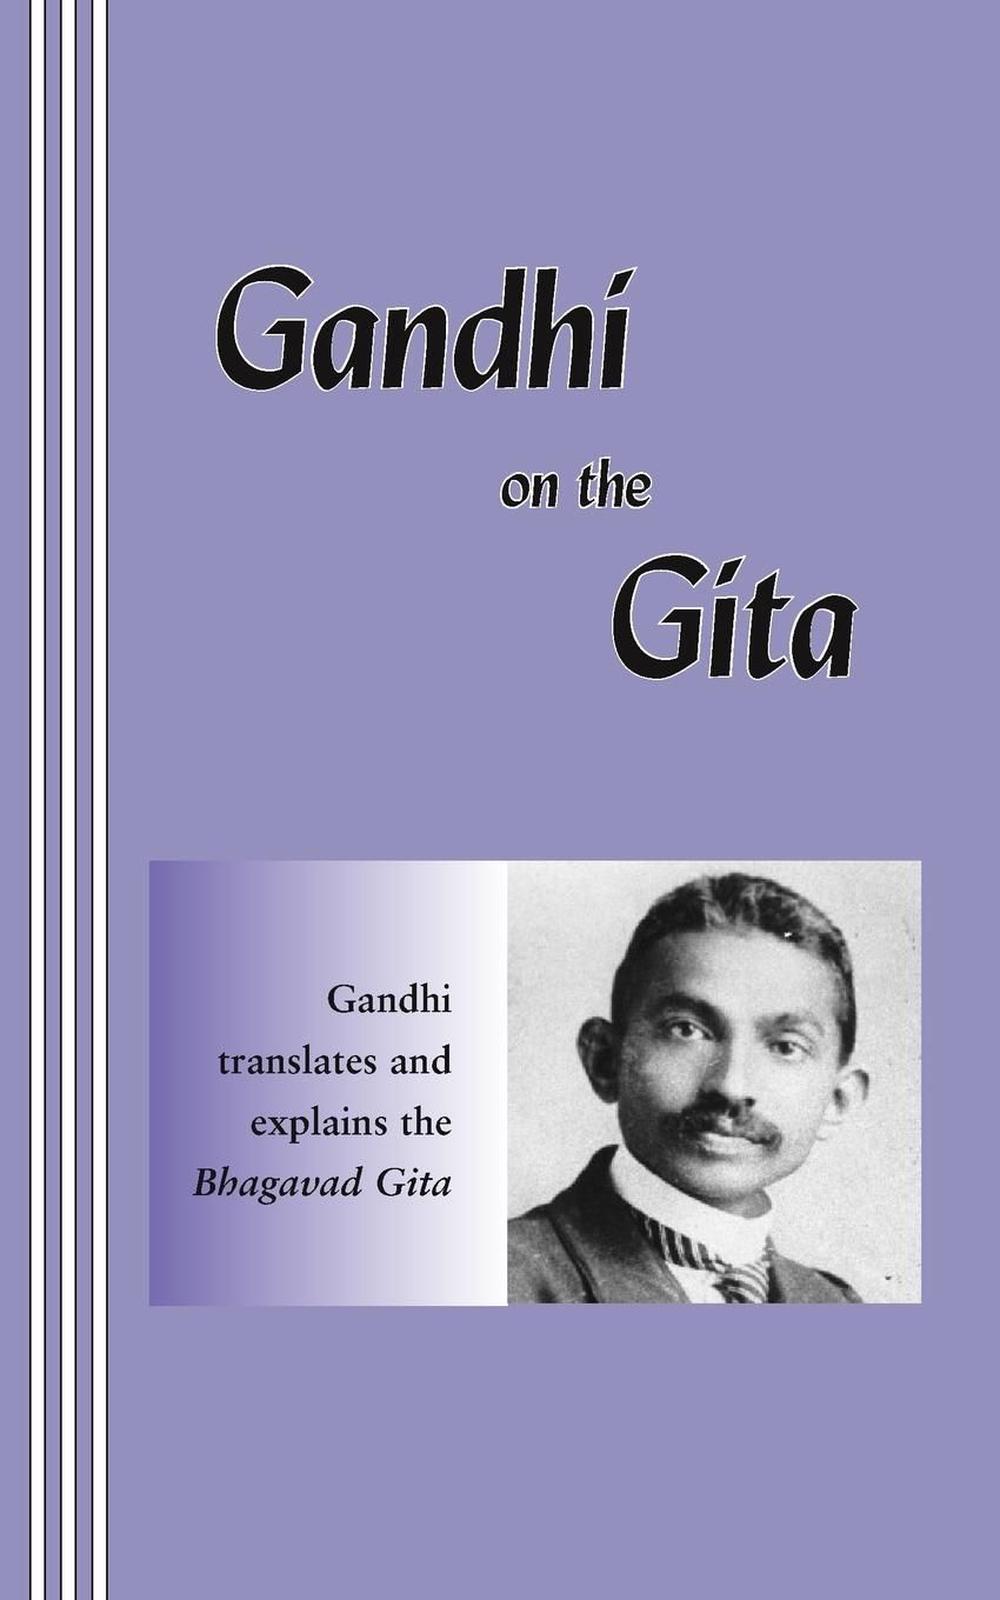 mahatma gandhi book review in english